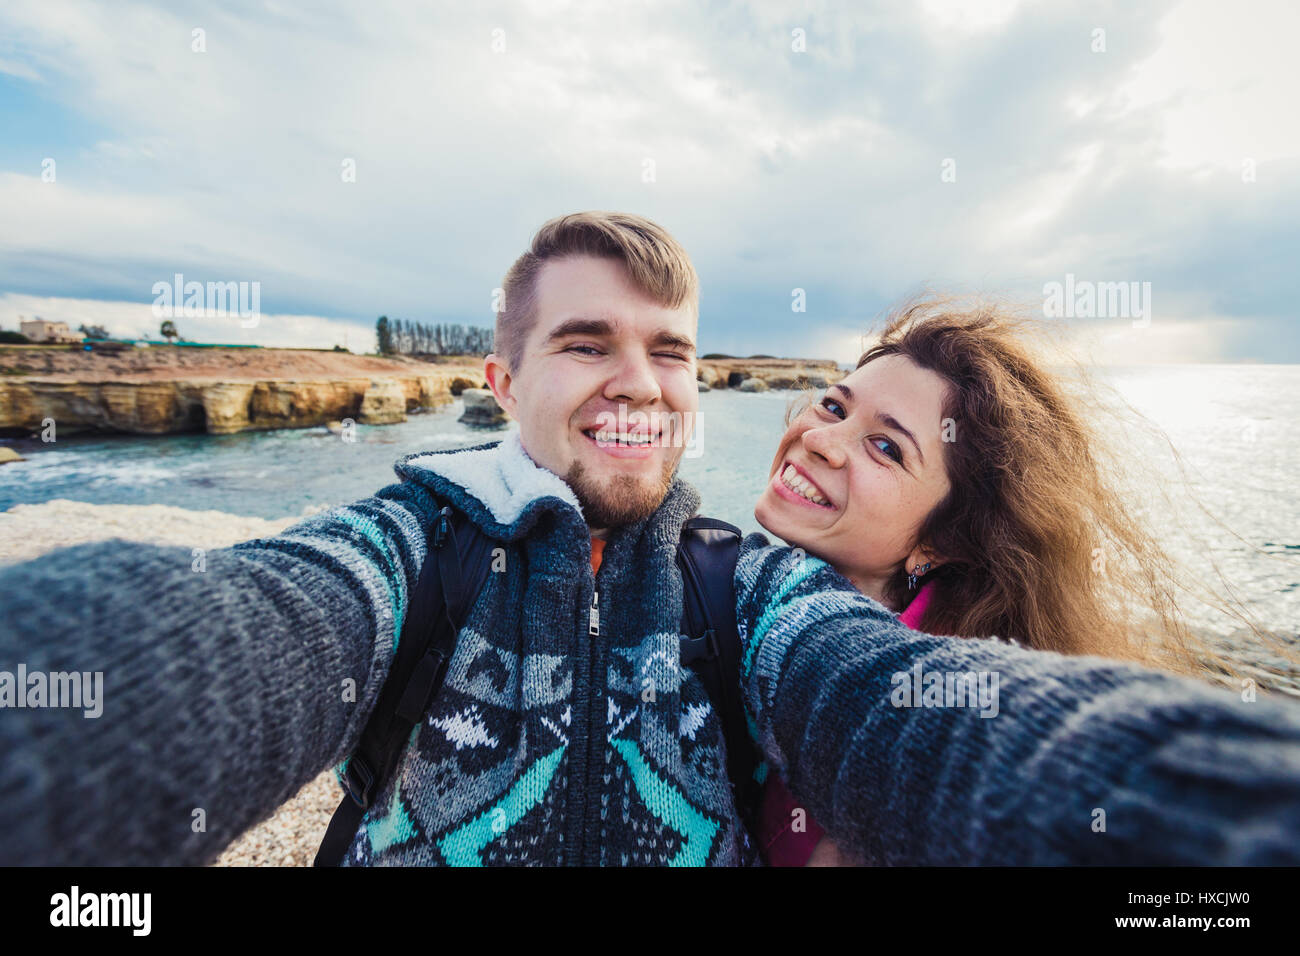 Urlaub Meer nimmt junge Brautpaar Selfie Foto. Stockfoto